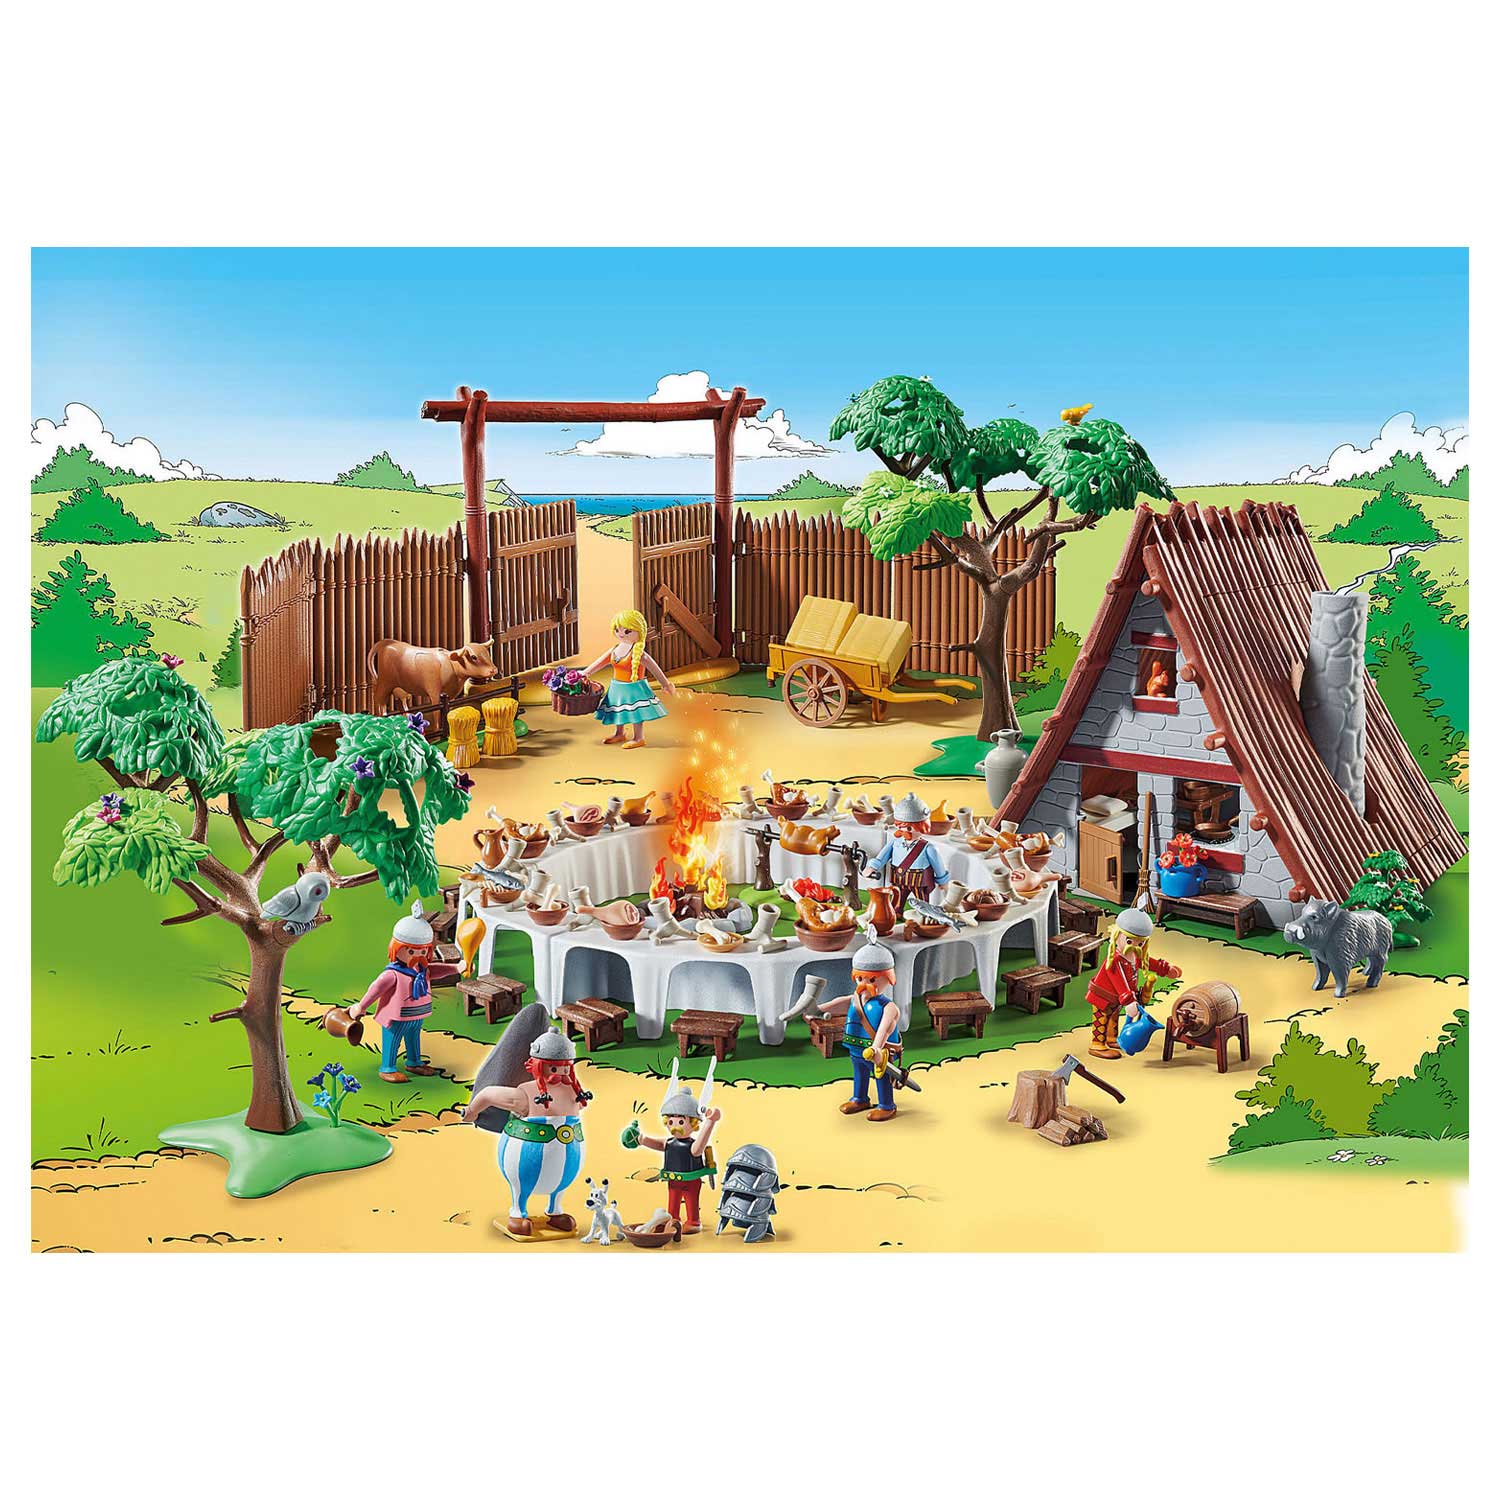 Playmobil Asterix Das große Dorffest - 70931